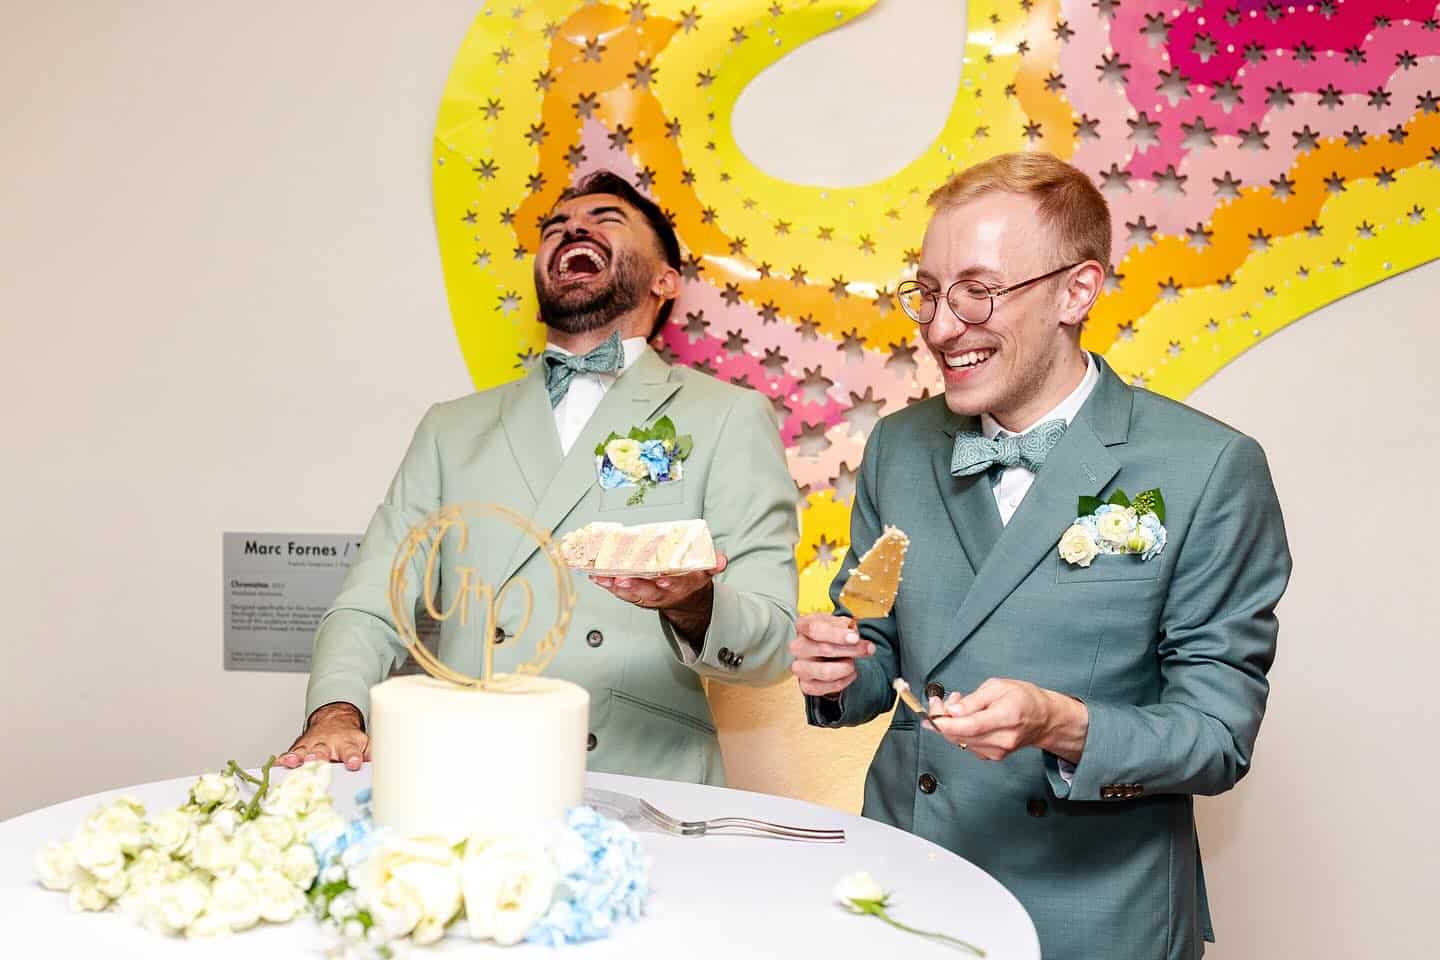 Both grooms laughing during cake cutting at the Denver Botanic Gardens during their downtown Denver LGBTQ wedding.